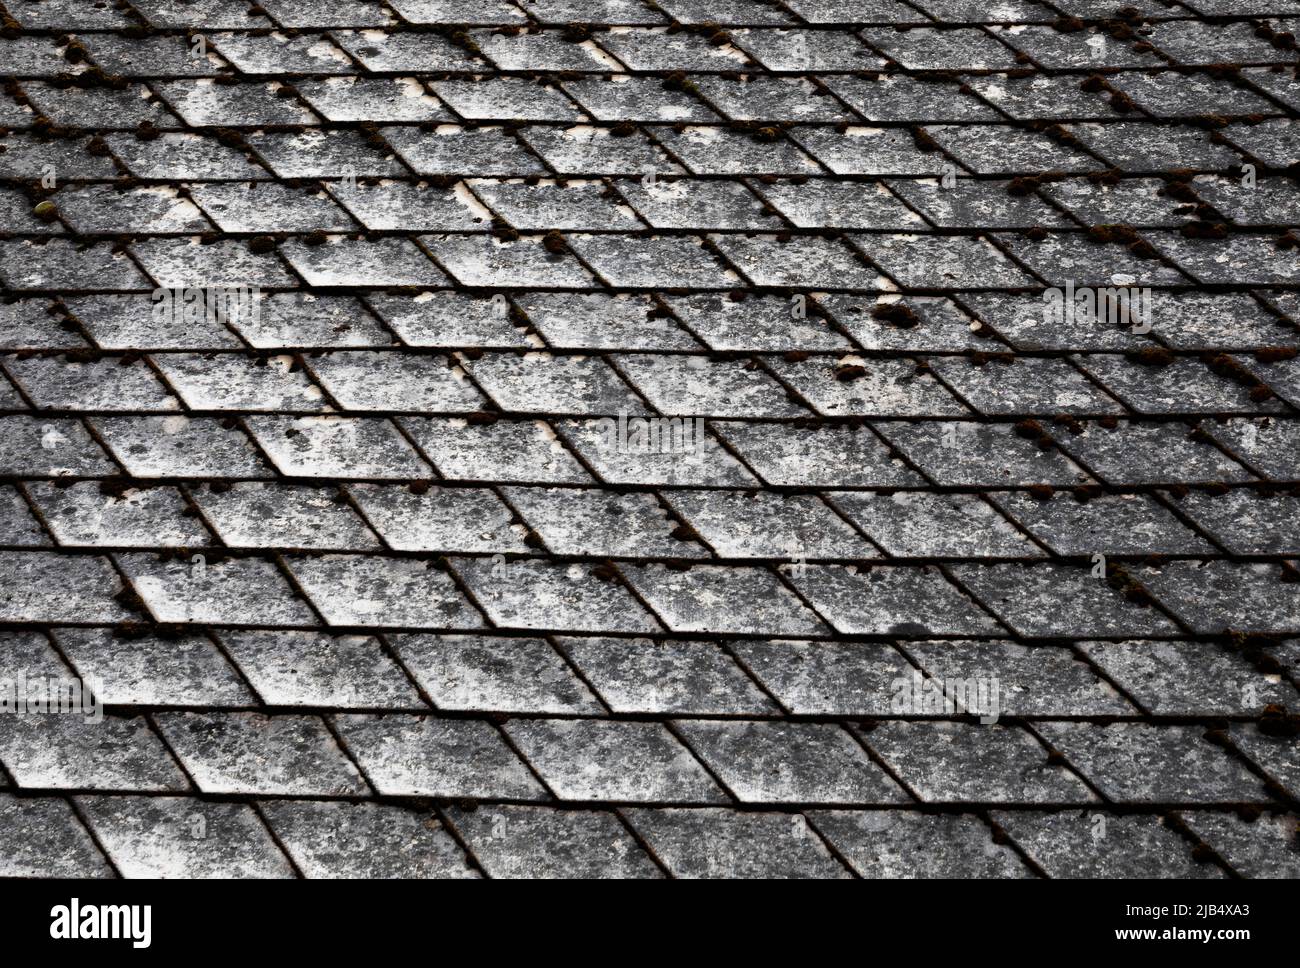 Old mossy and weathered house roof, background image, Bad Leonfelden, Muehlviertel region, Upper Austria, Austria Stock Photo